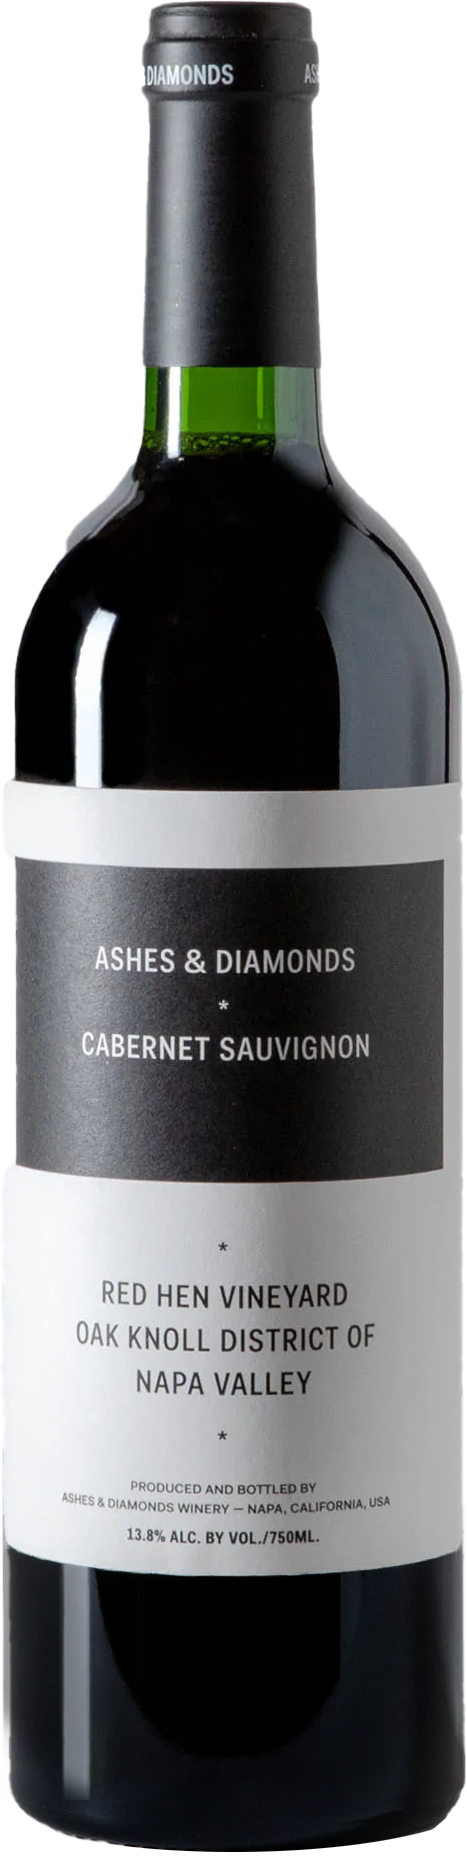 Ashes & Diamonds Napa Valley Red Hen No.3 Cabernet Sauvignon 2018